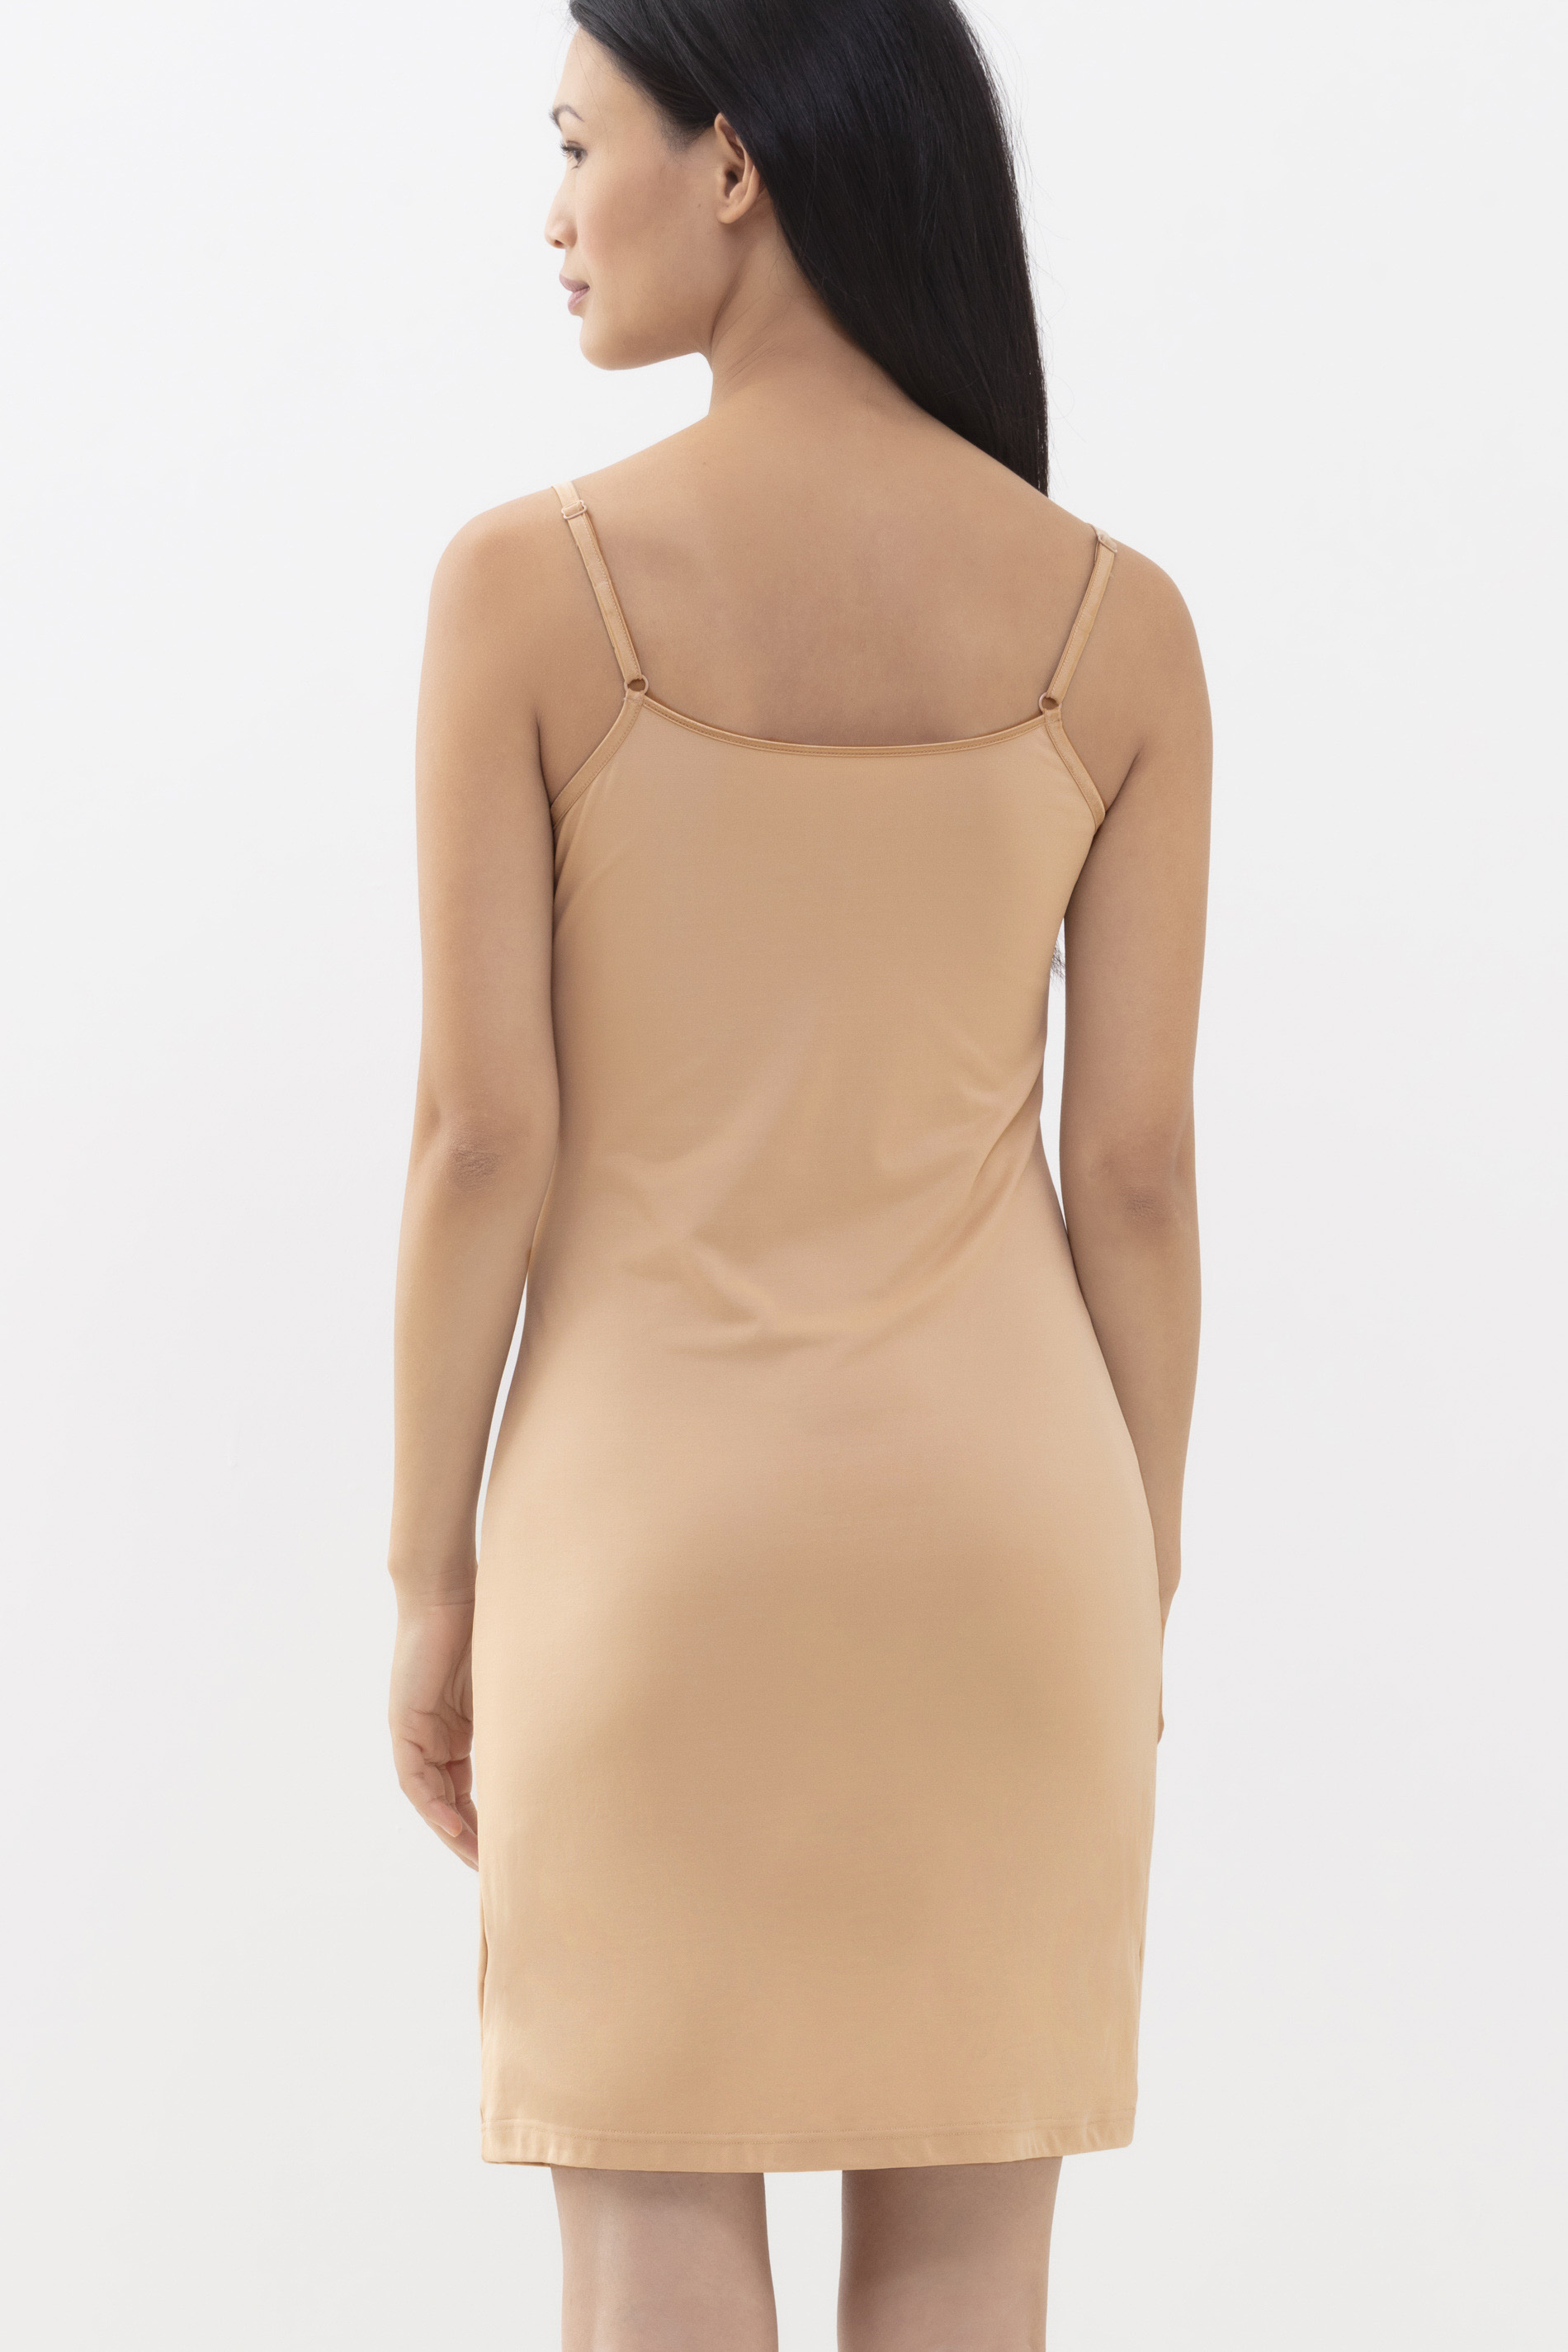 Body-Dress Cream Tan Serie Emotion Rear View | mey®